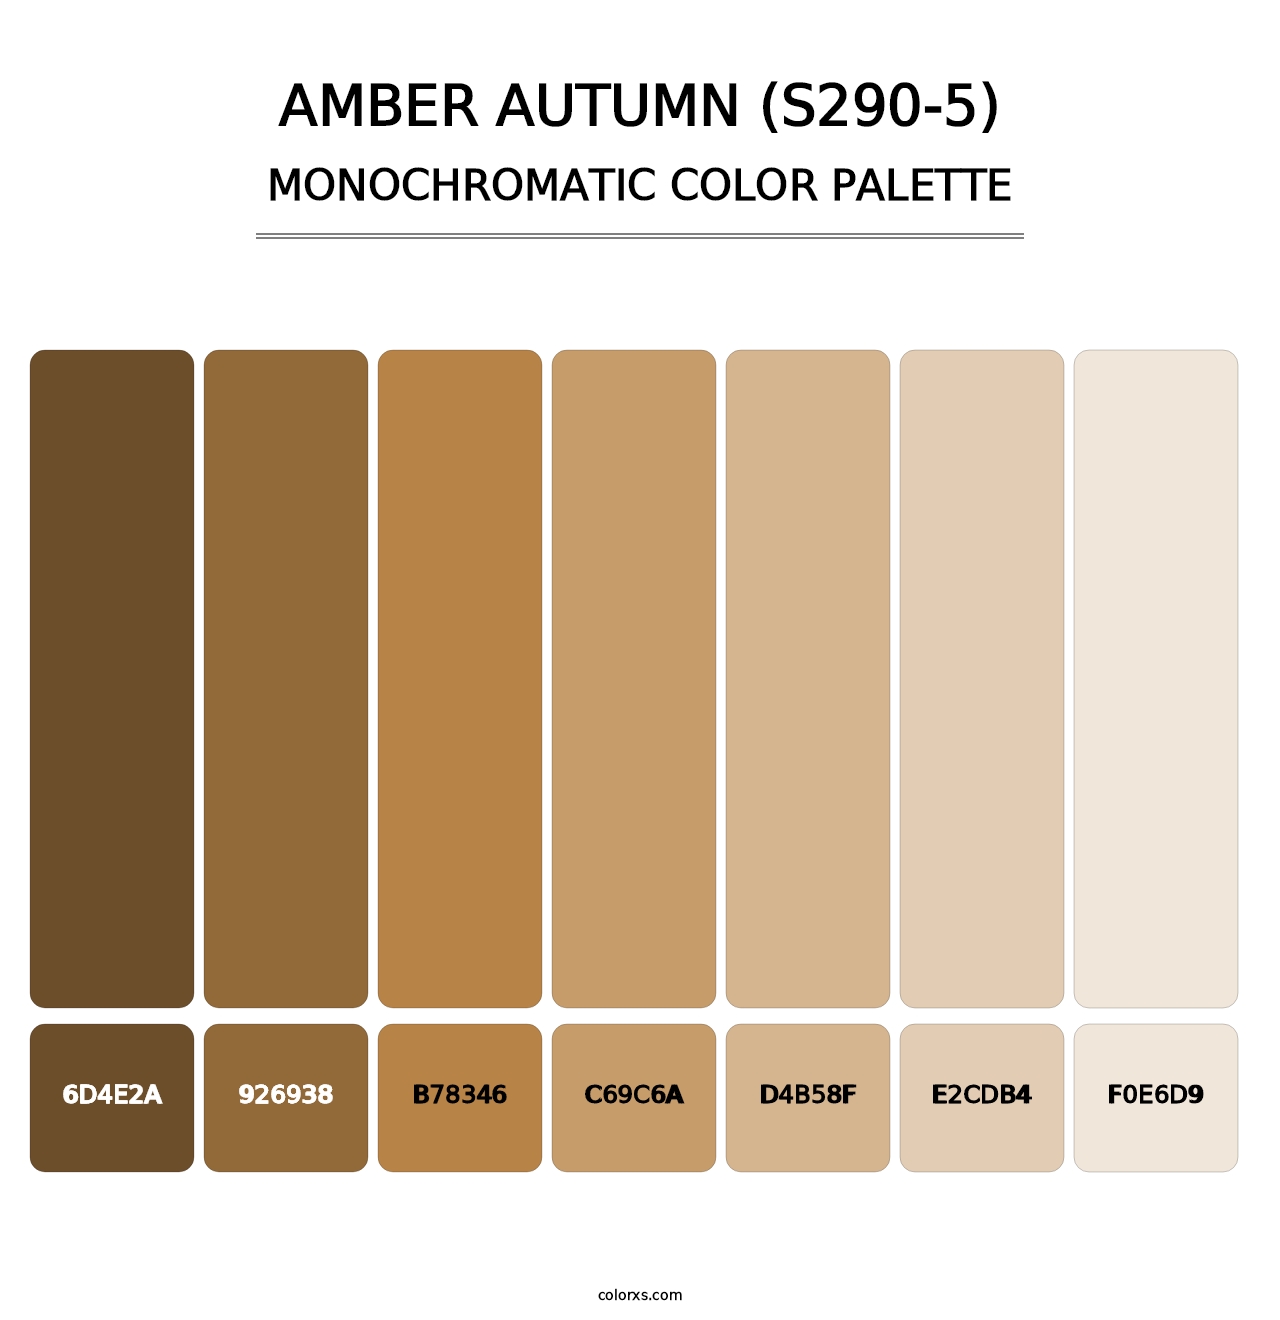 Amber Autumn (S290-5) - Monochromatic Color Palette